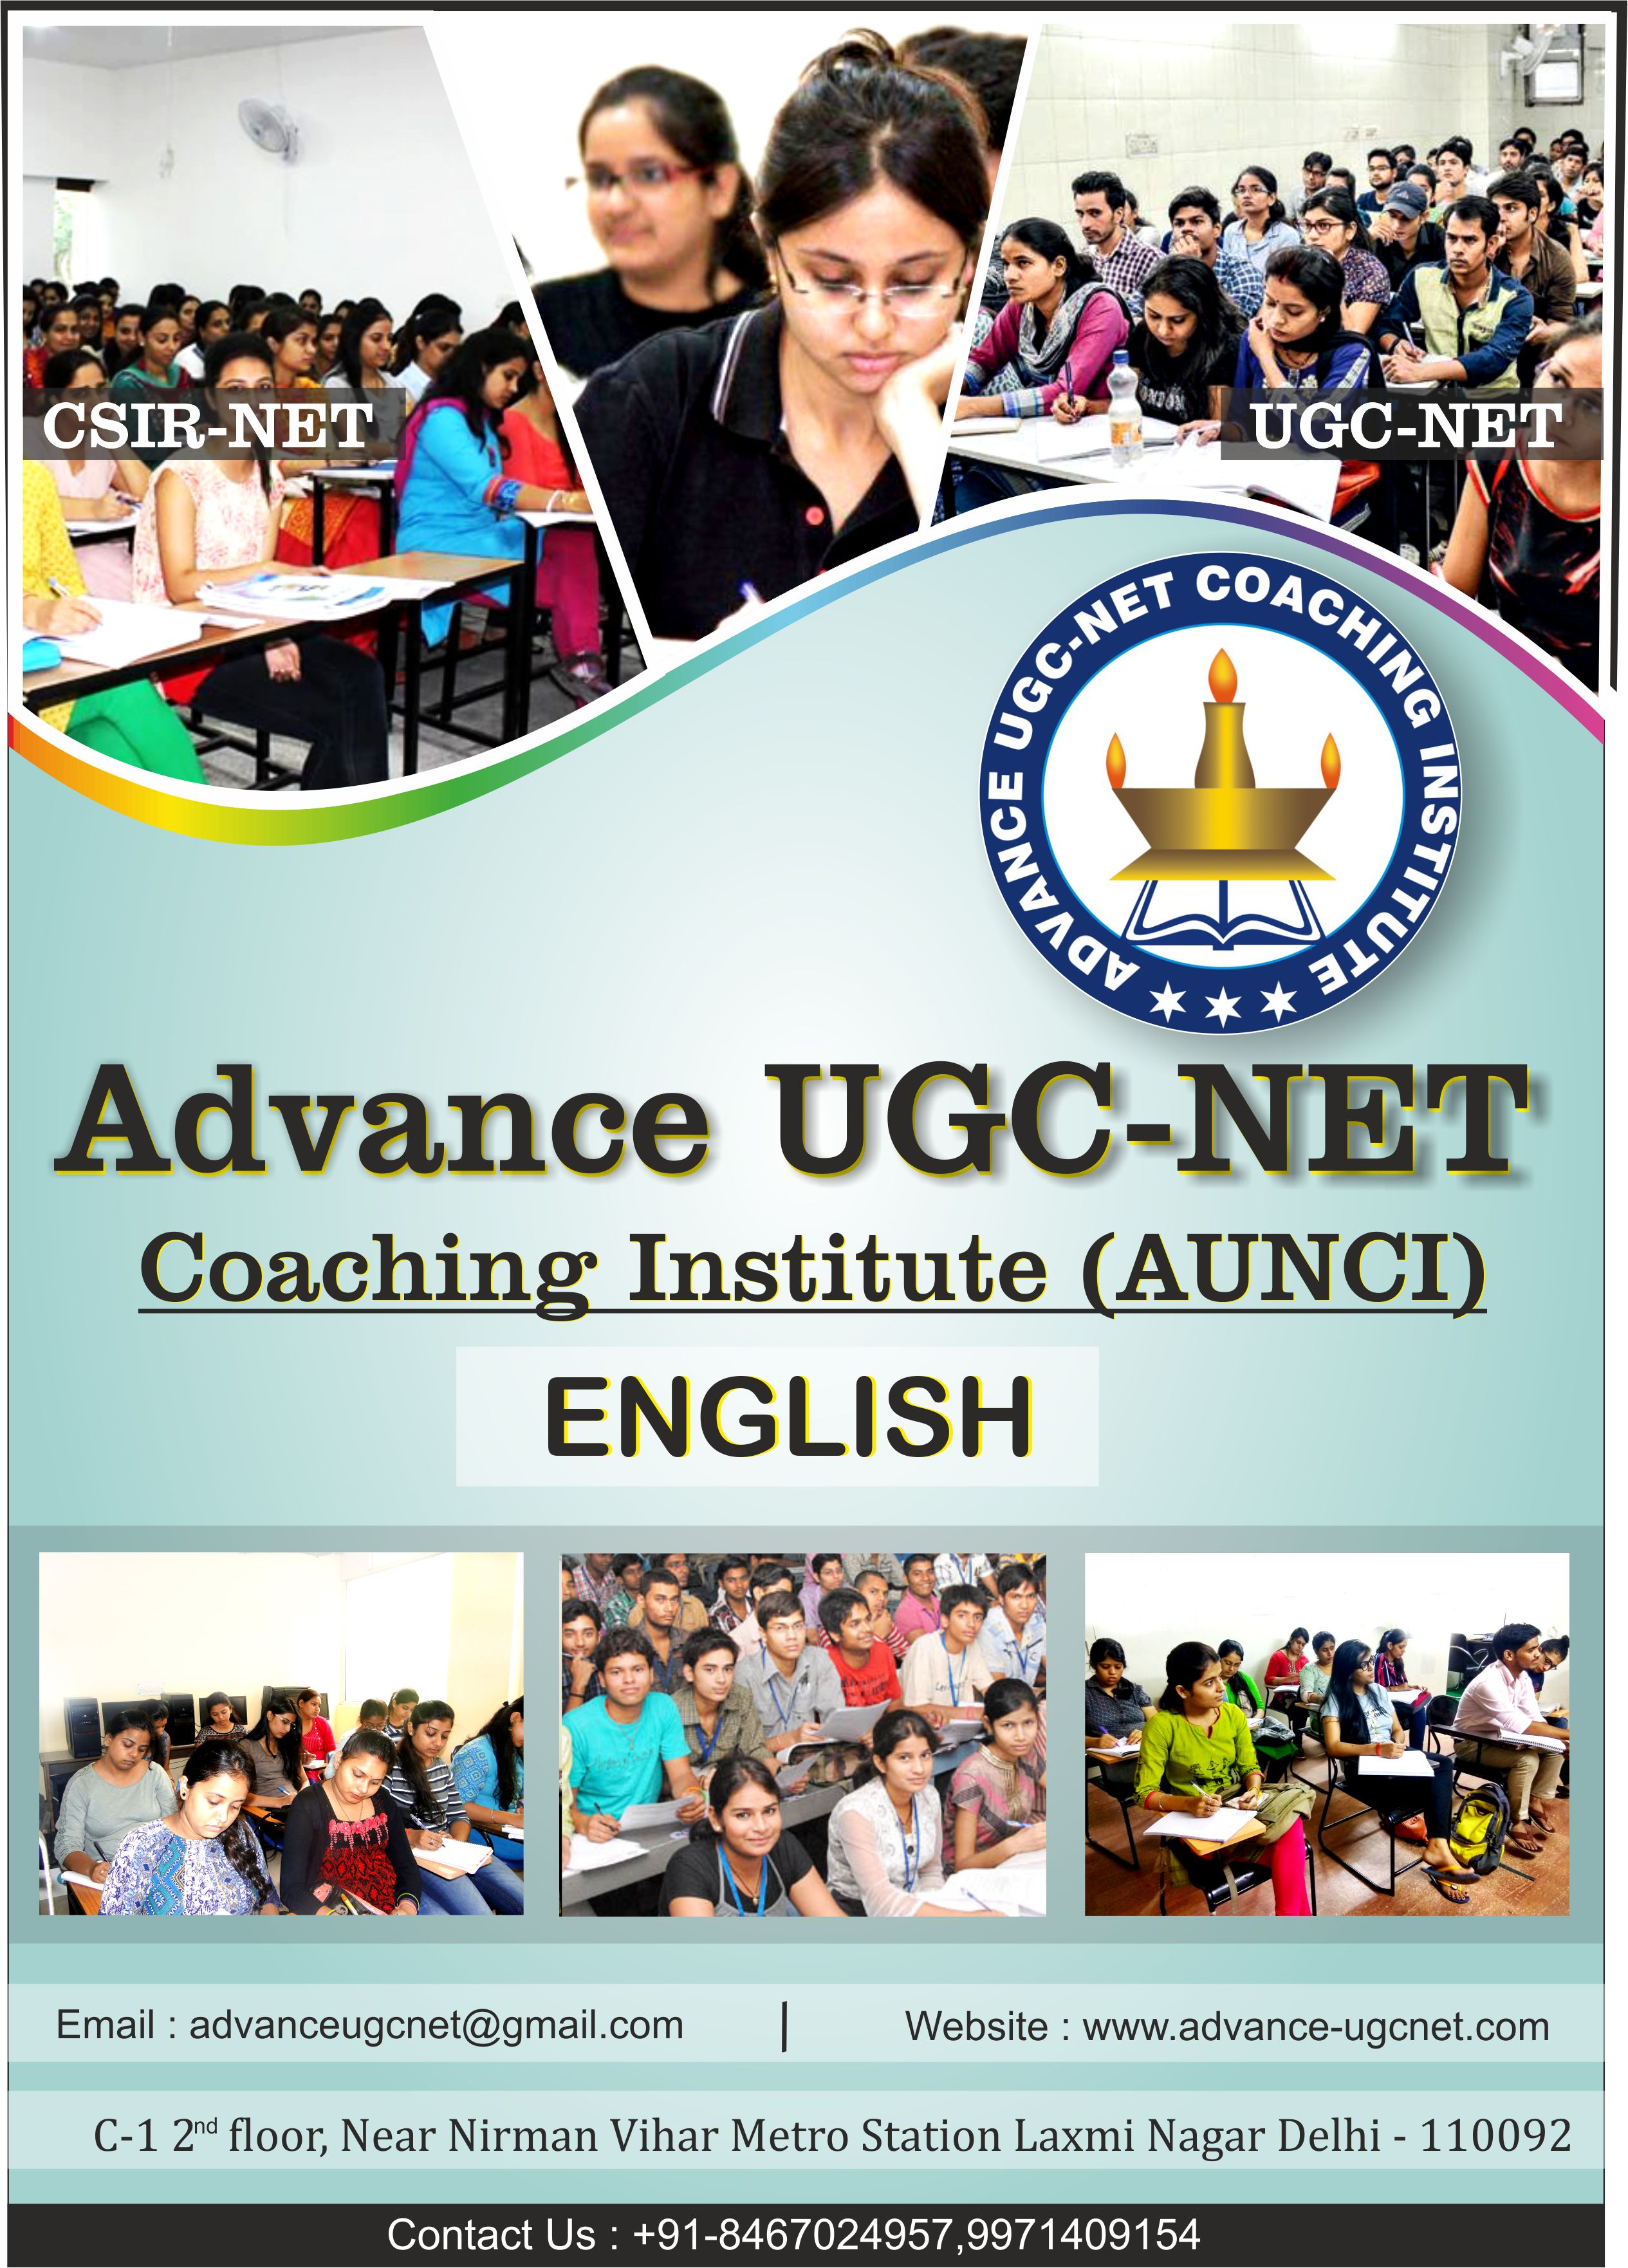 ugc net English coaching institute in delhi, UGc net English coaching academy in delhi, Ugc net coaching classes in delhi, Ugc net coaching center in east delhi, Coaching center for ugc net coaching in east delhi, Ugc net English coaching in delhi